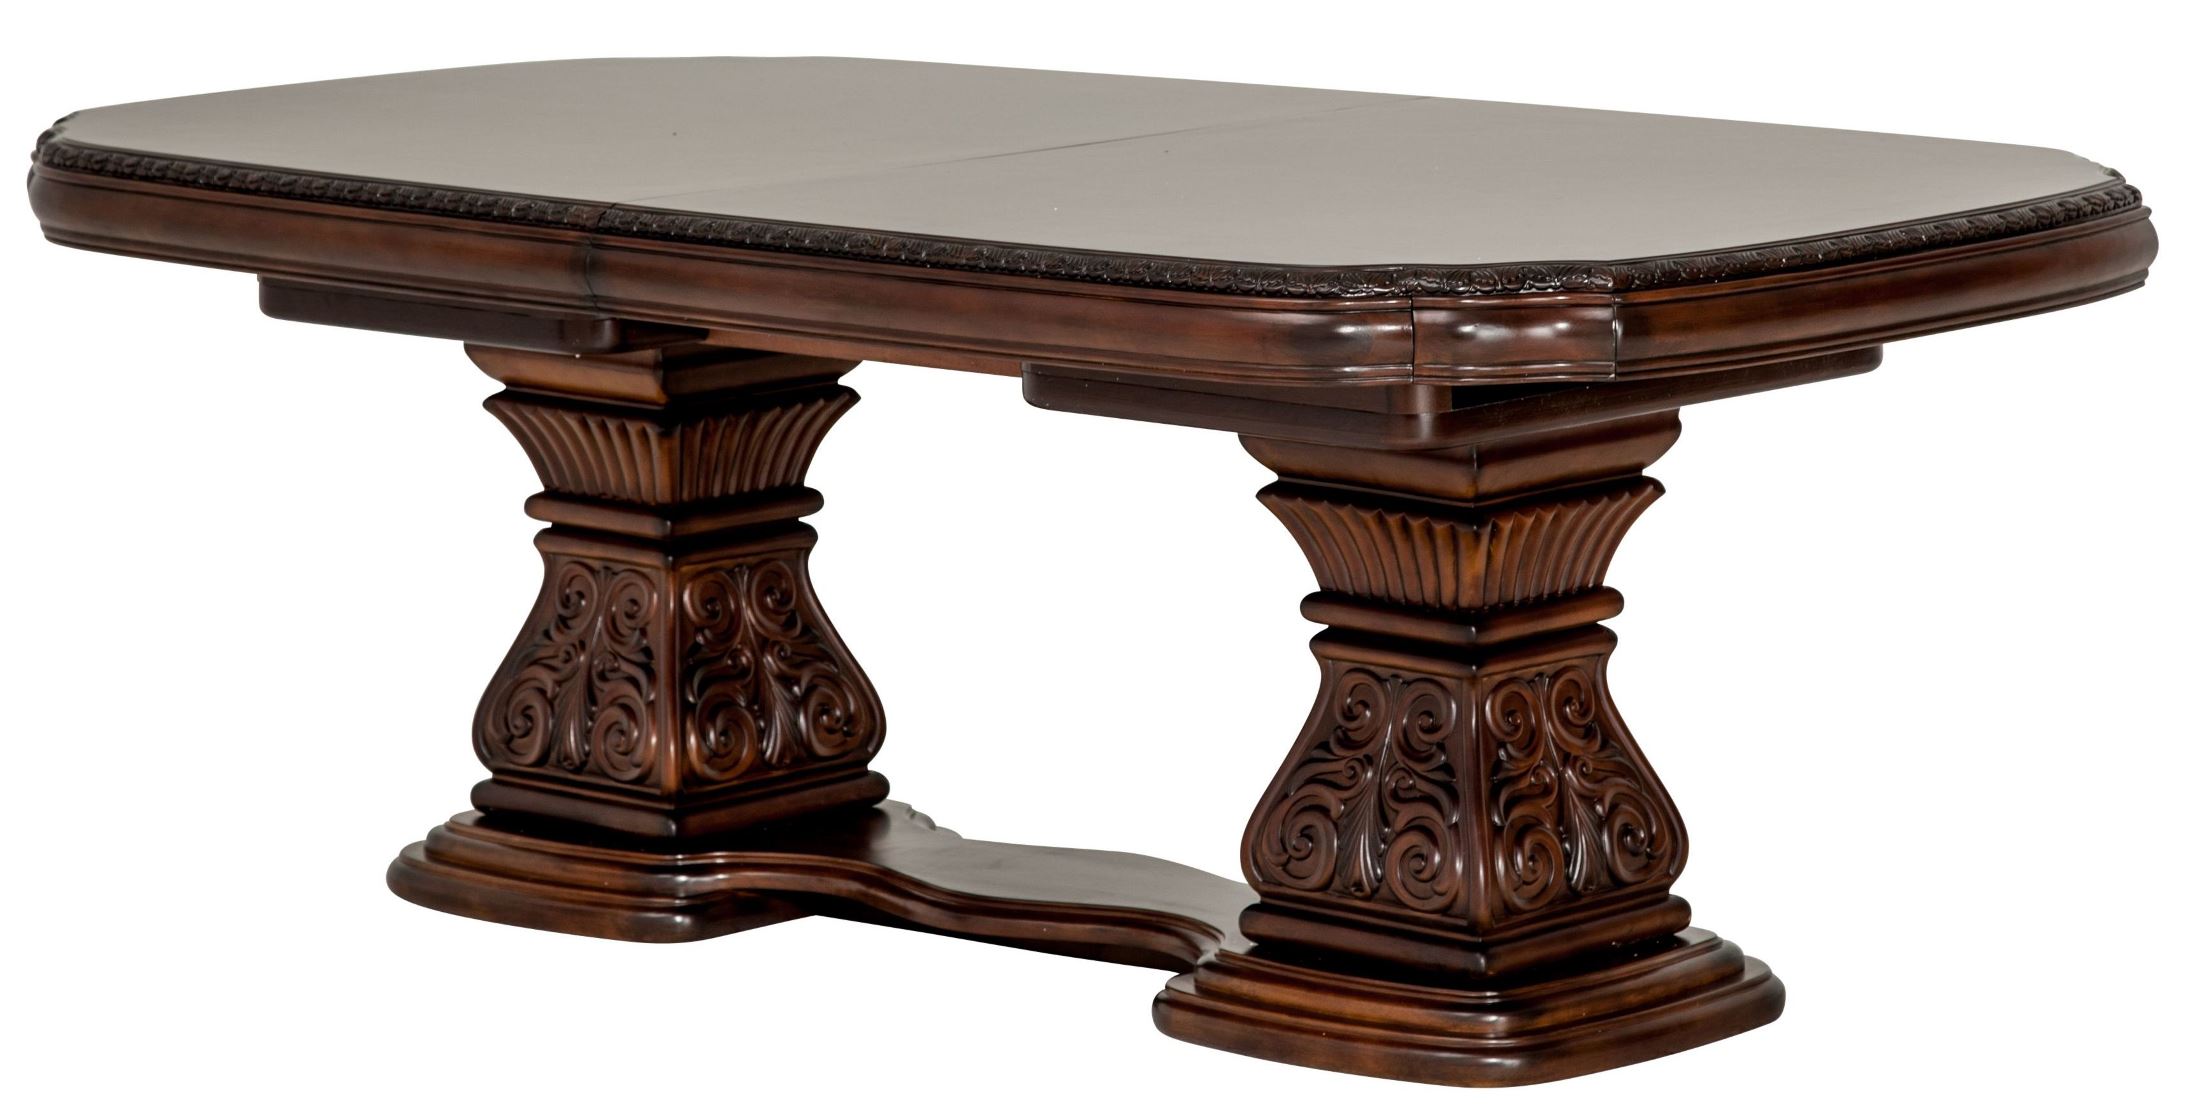 AICO Villagio Double Pedestal Rectangular Dining Table - The Villagio